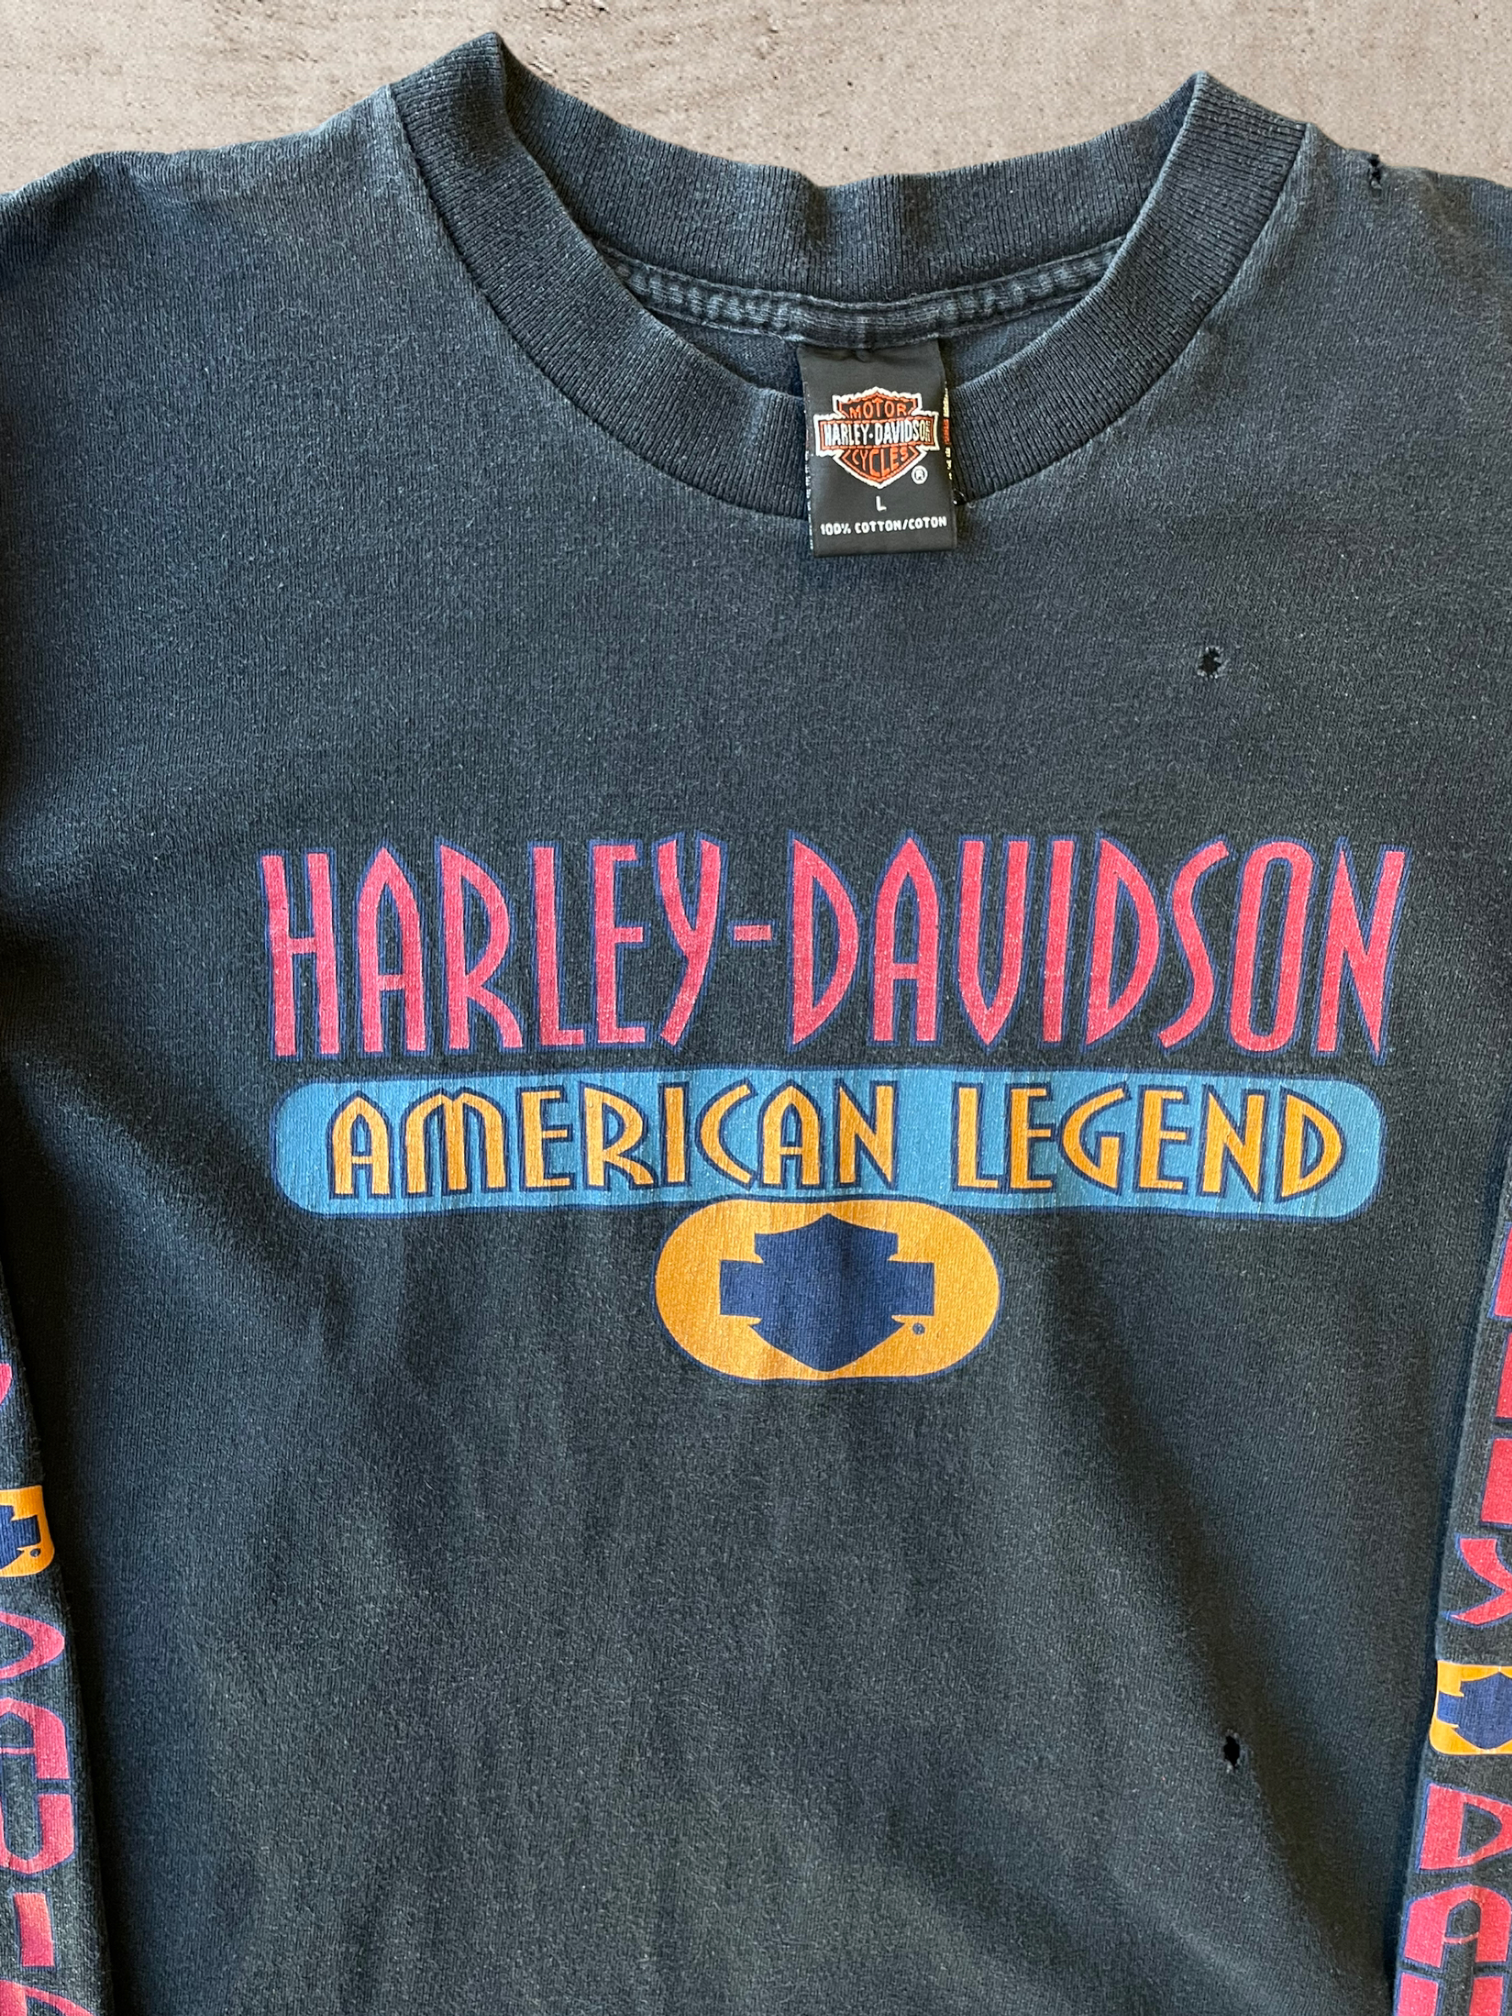 1997 Harley Davidson Long Sleeve T-Shirt - Large